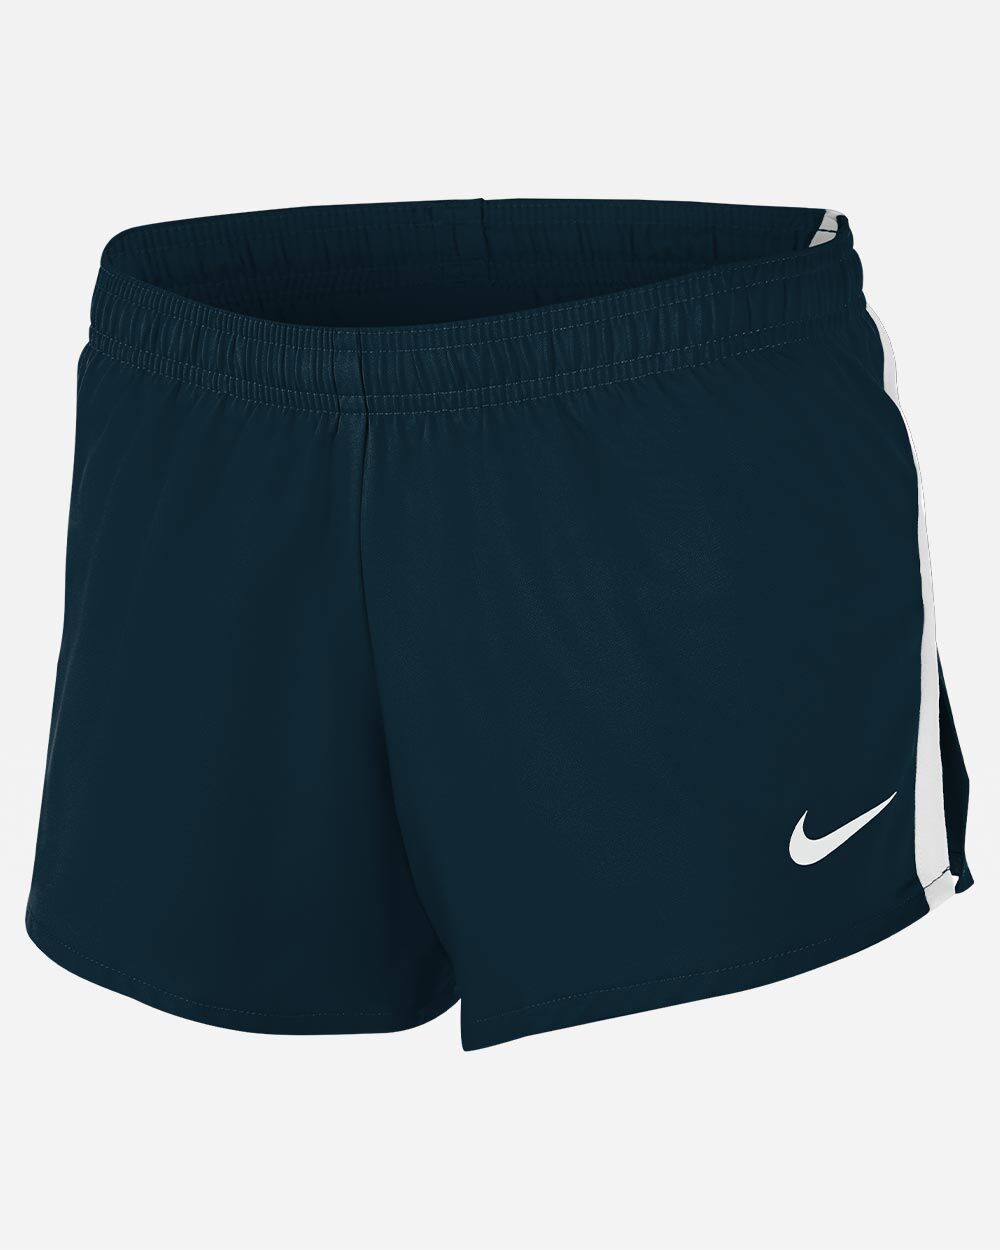 Pantalón corto para correr Nike Stock Azul Marino Mujeres - NT0304-451